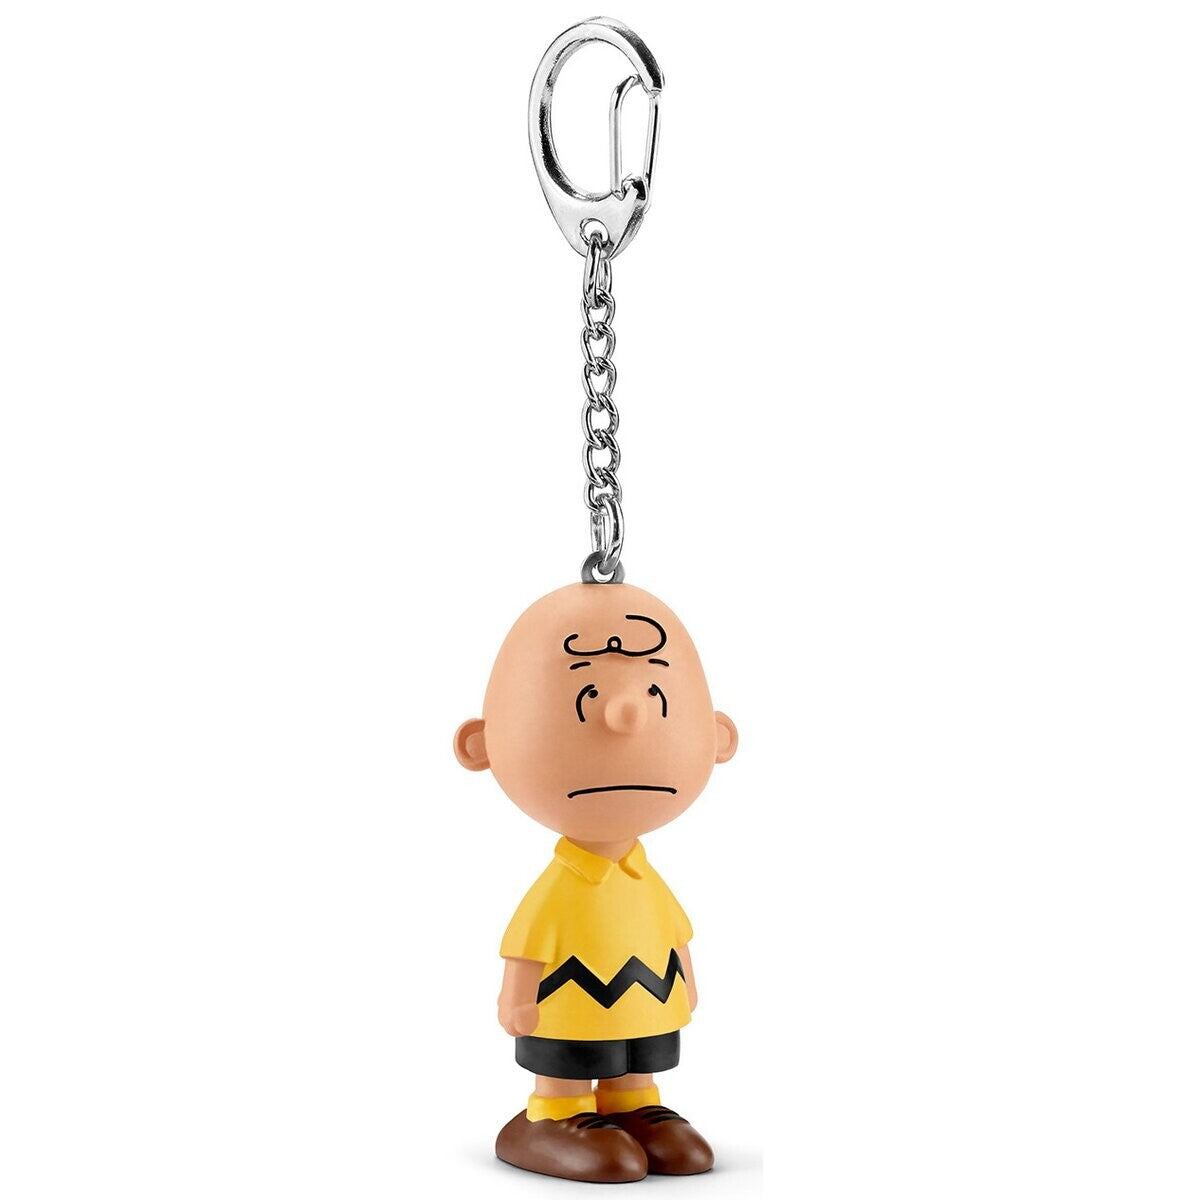 Peanuts Schleich® keyring chain figurine Snoopy, Charlie Brown 22040